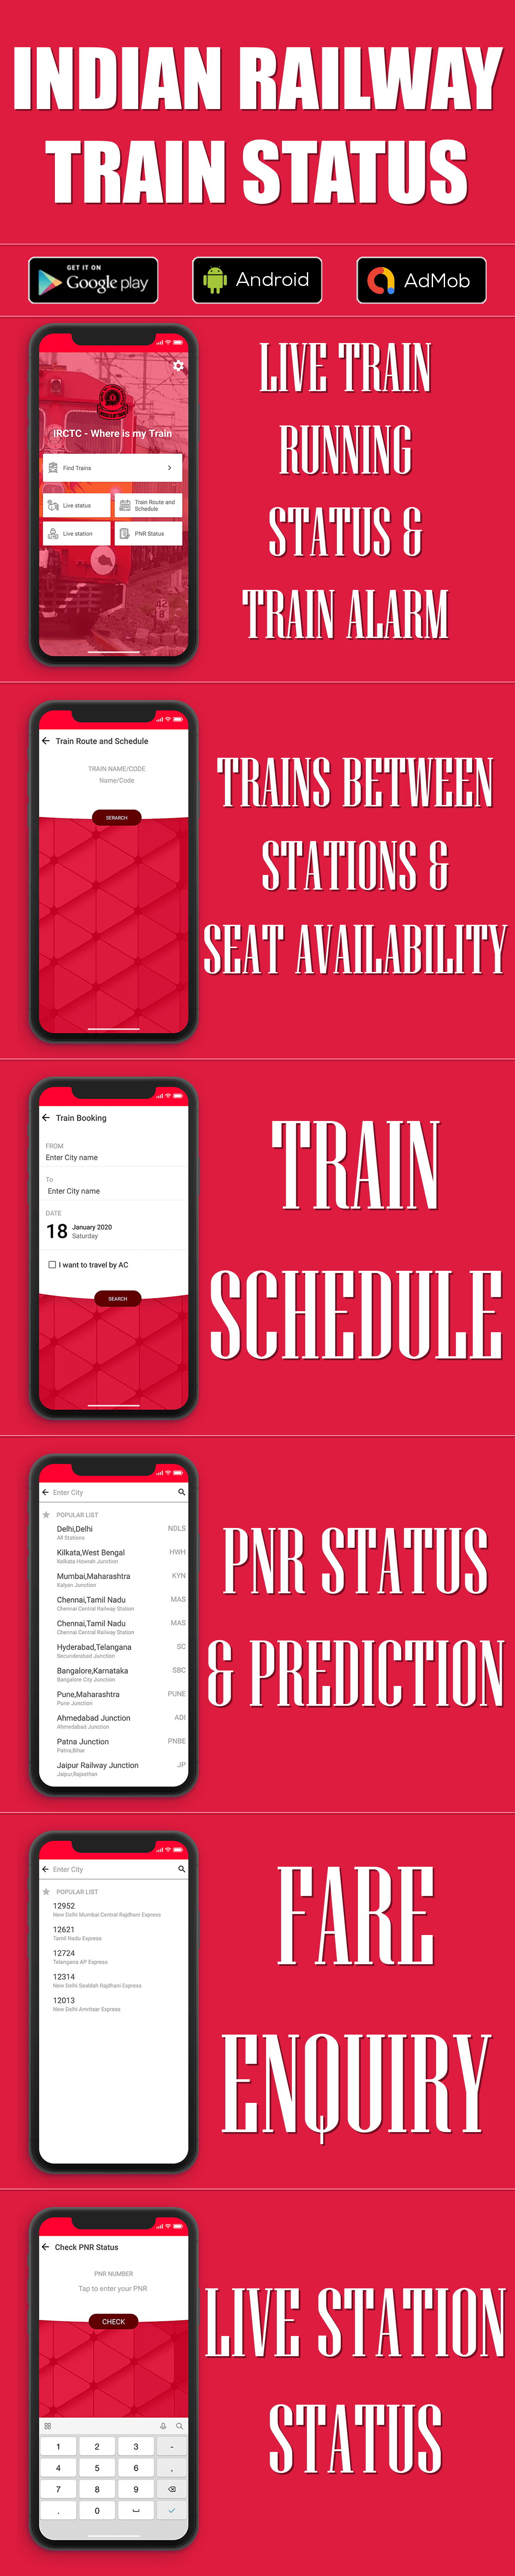 Indian Railway Train Status | Android App - 1